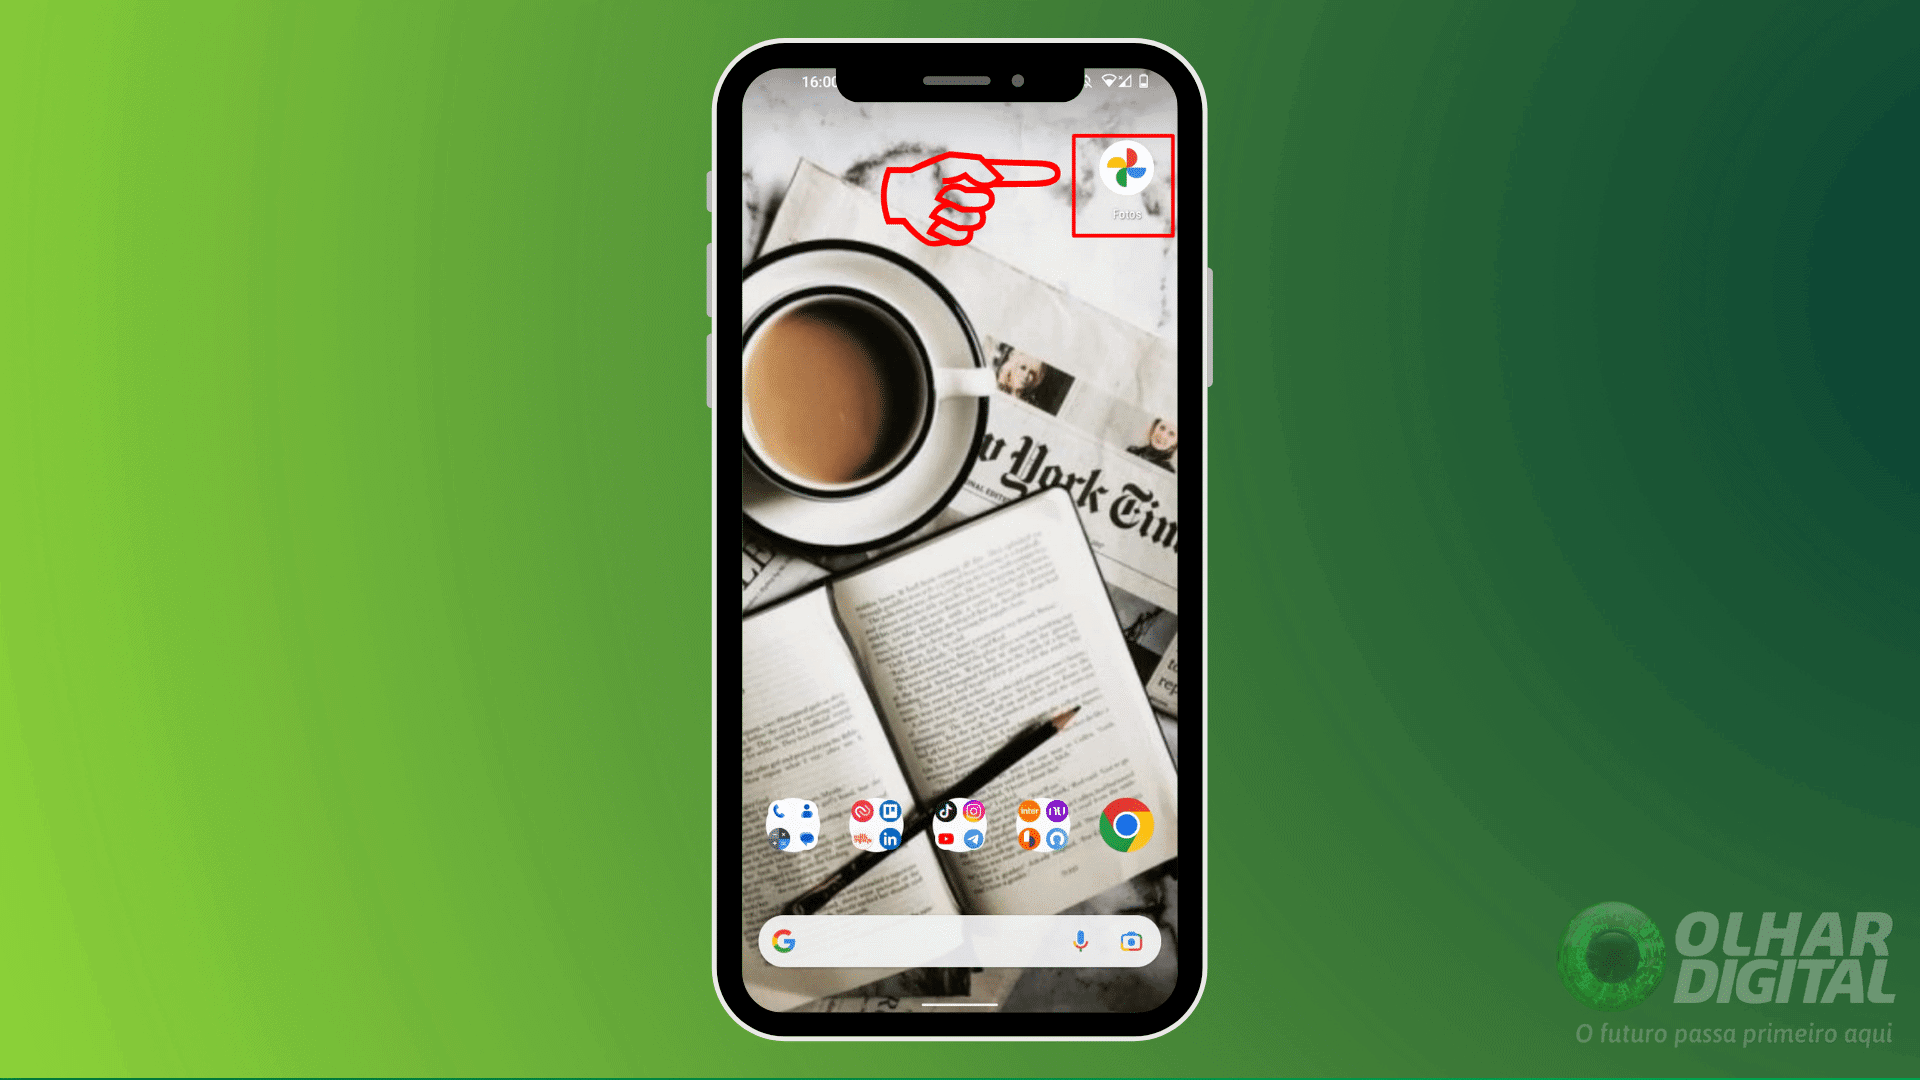 1-como-recuperar-fotos-apagados-do-celular-android Como recuperar fotos apagadas do seu celular Android